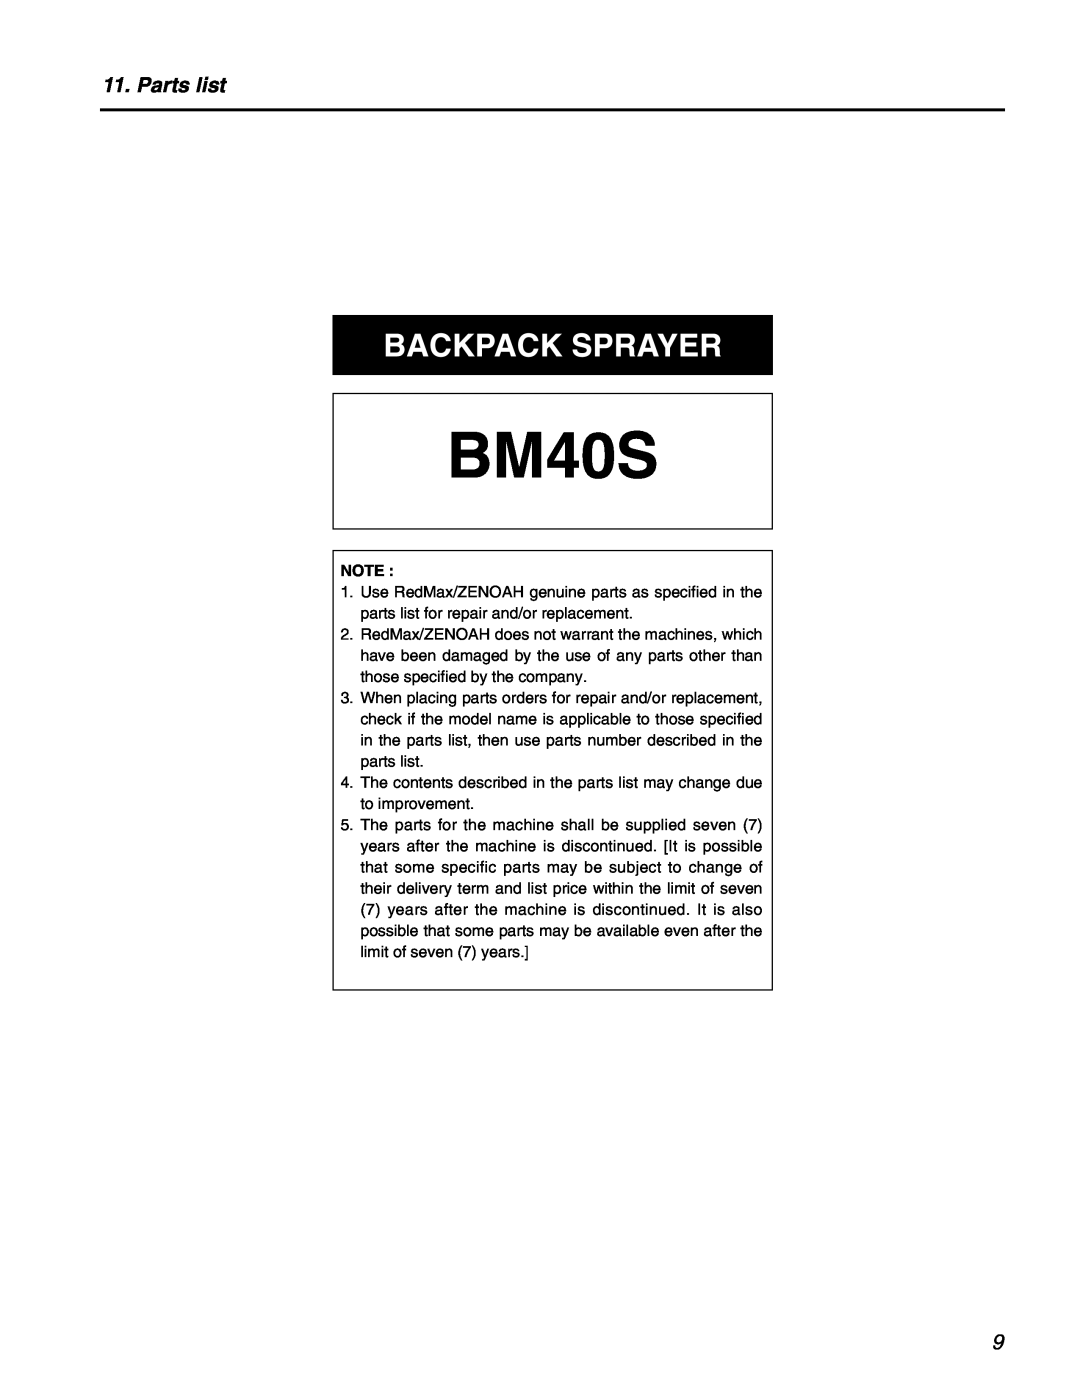 Zenoah BM40S manual Parts list, Backpack Sprayer 